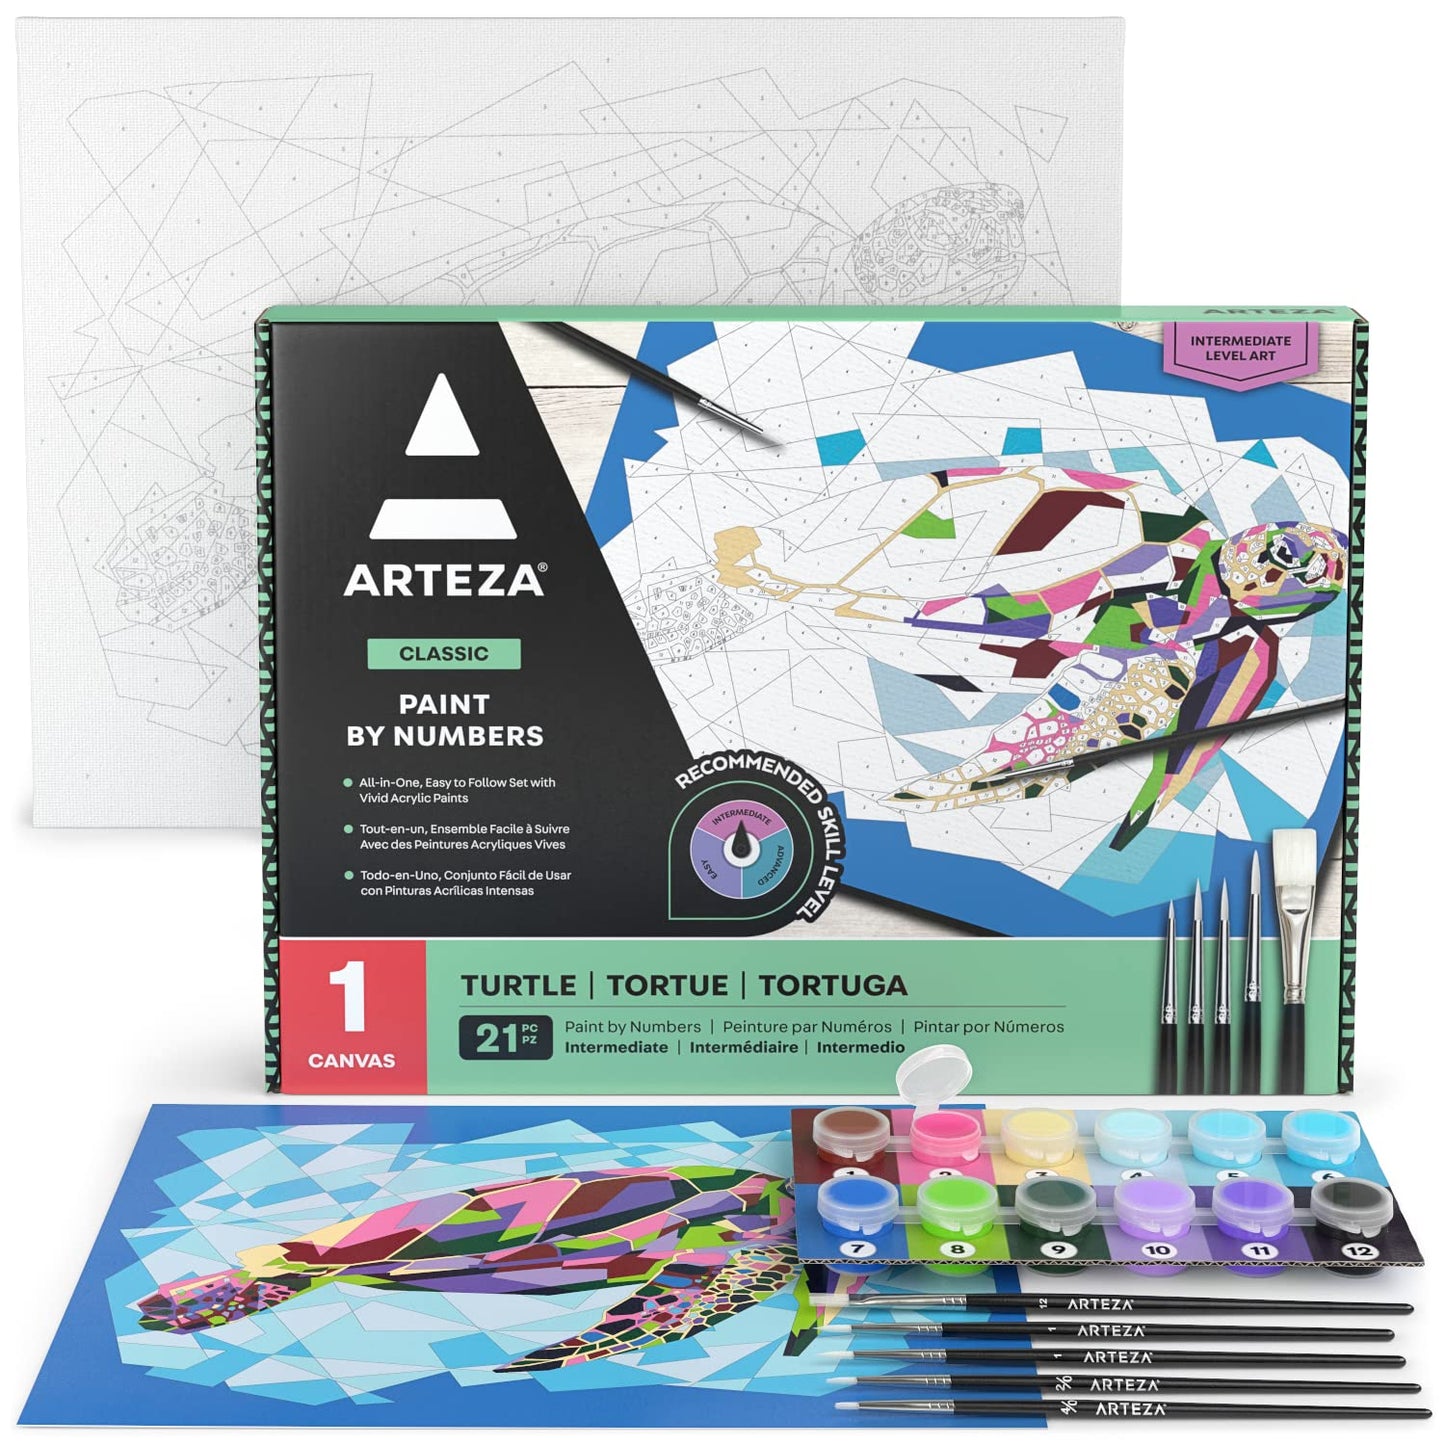 Arteza Paint by Numbers, Sea Turtle - Intermediate Level Kit